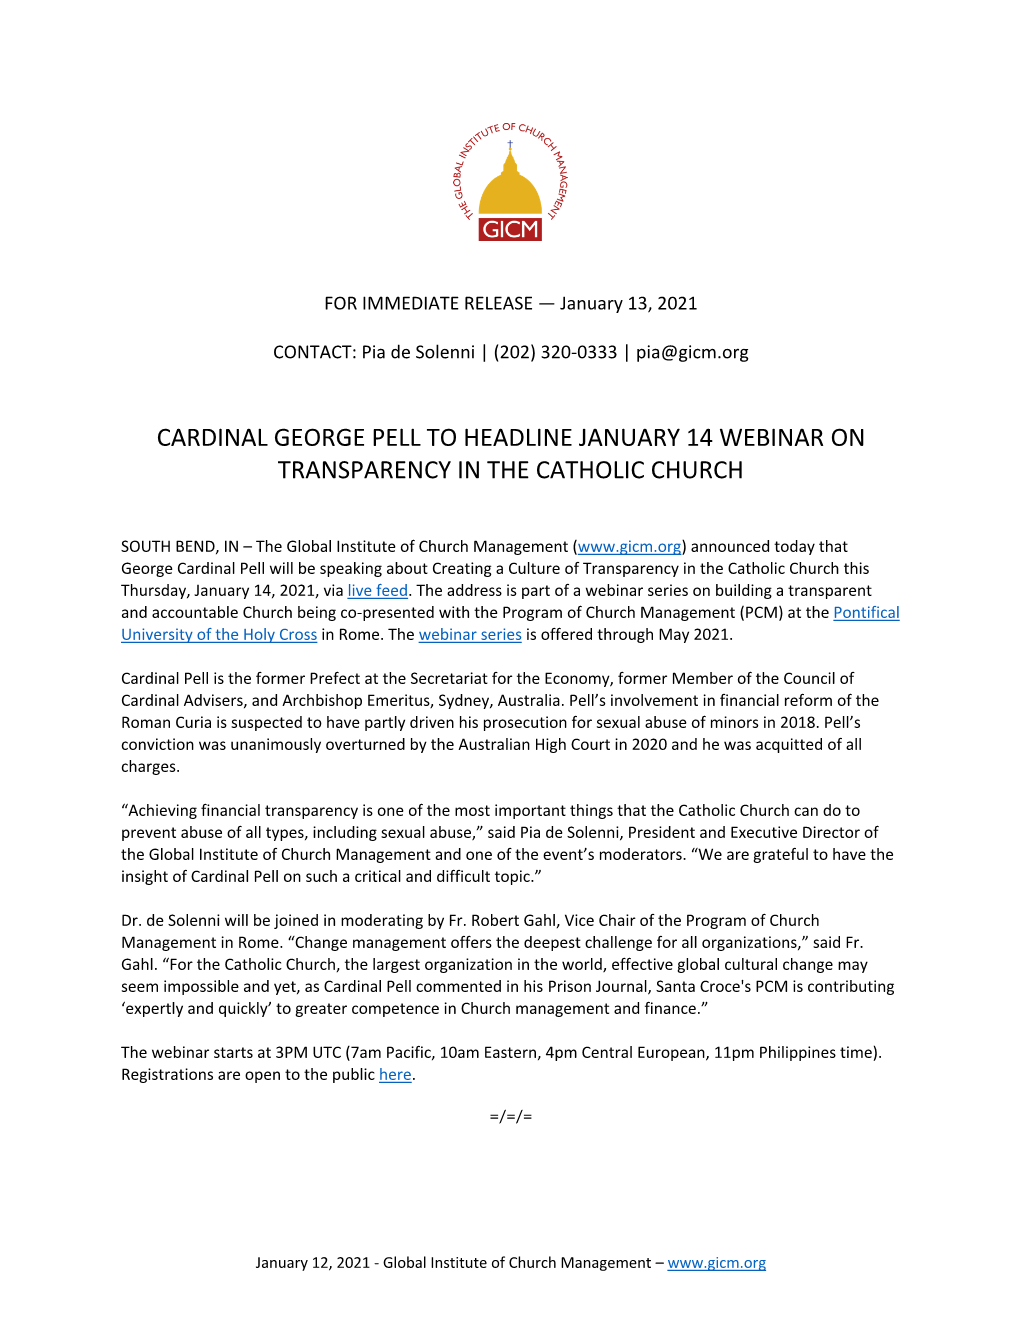 Cardinal George Pell to Headline January 14 Webinar on Transparency in the Catholic Church